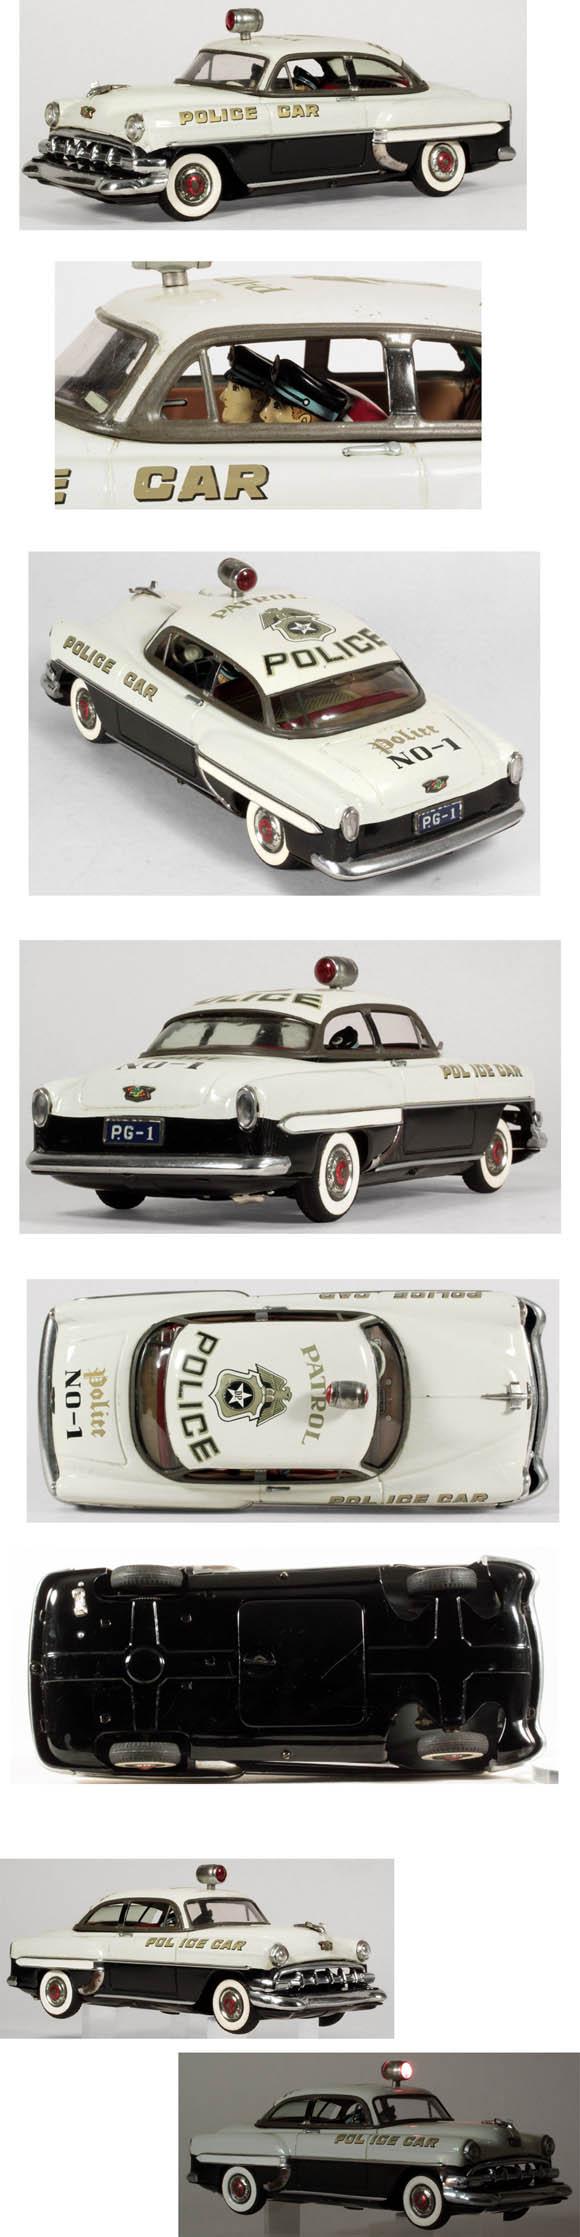 1954 Marusan, Chevrolet 2dr. Sedan Stop-Go Police Car w/Siren & Light